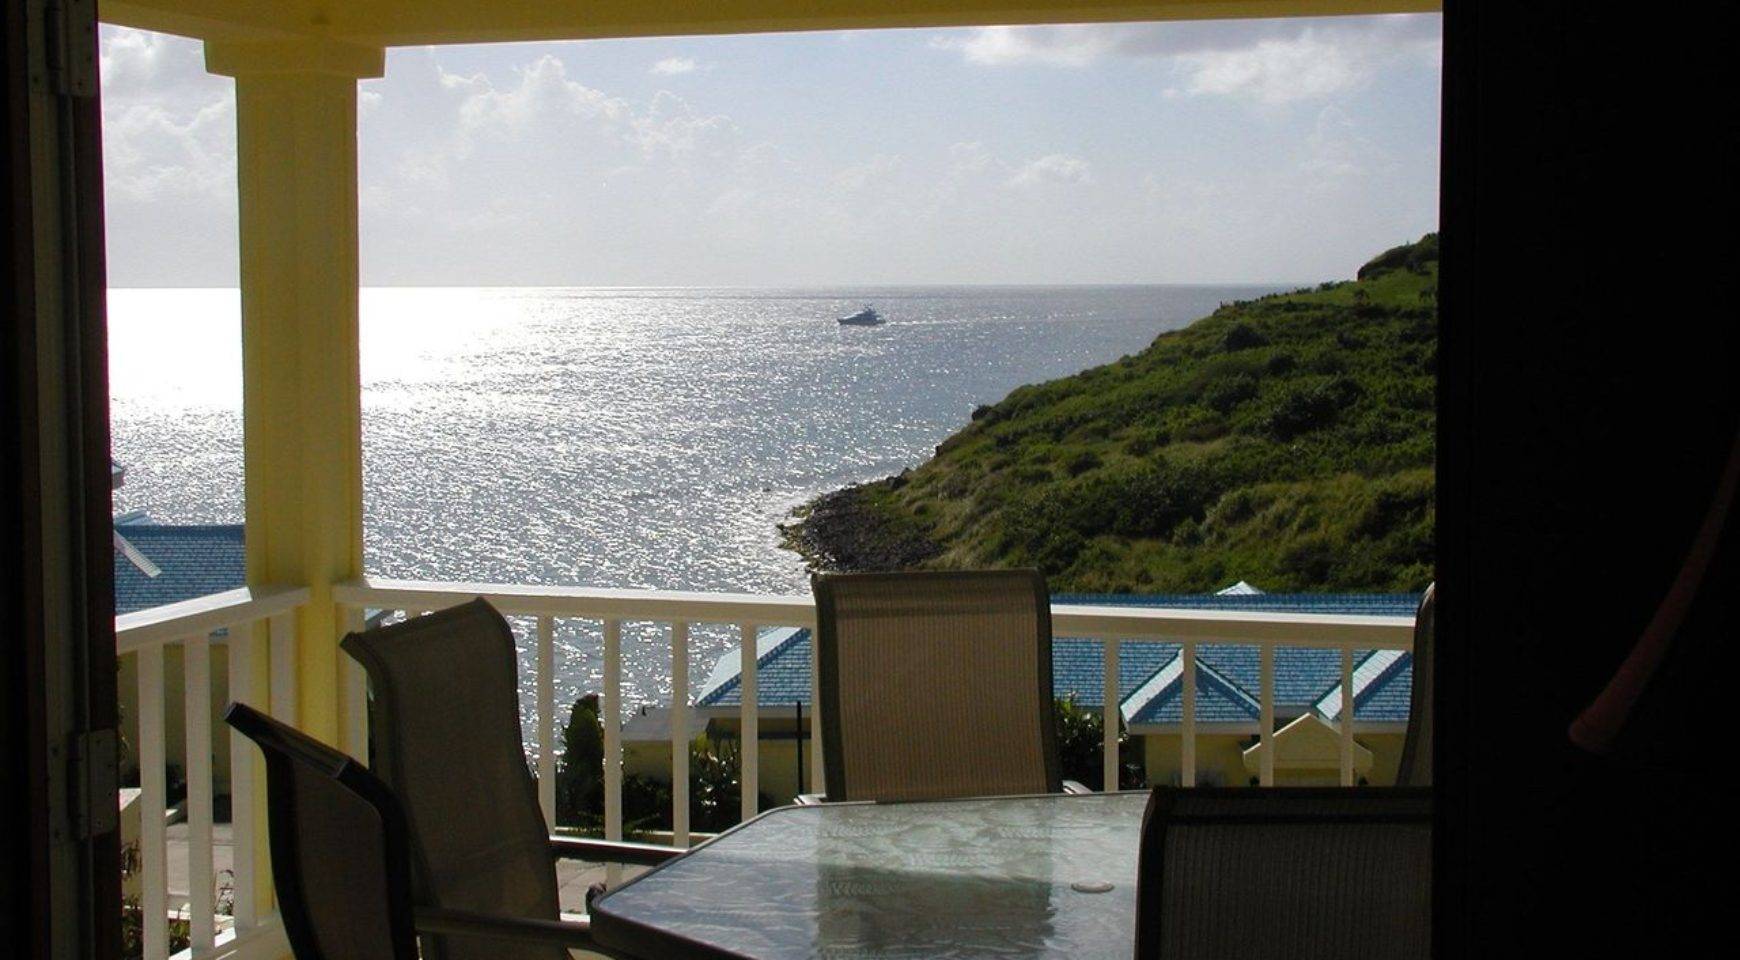 Calypso Bay St Kitts Rental,Calypso Bay Resort,Calypso Bay Resort St Kitts,calypso resort st kitts,Calypso Bay St Kitts,calypso bay resort st kitts and nevis